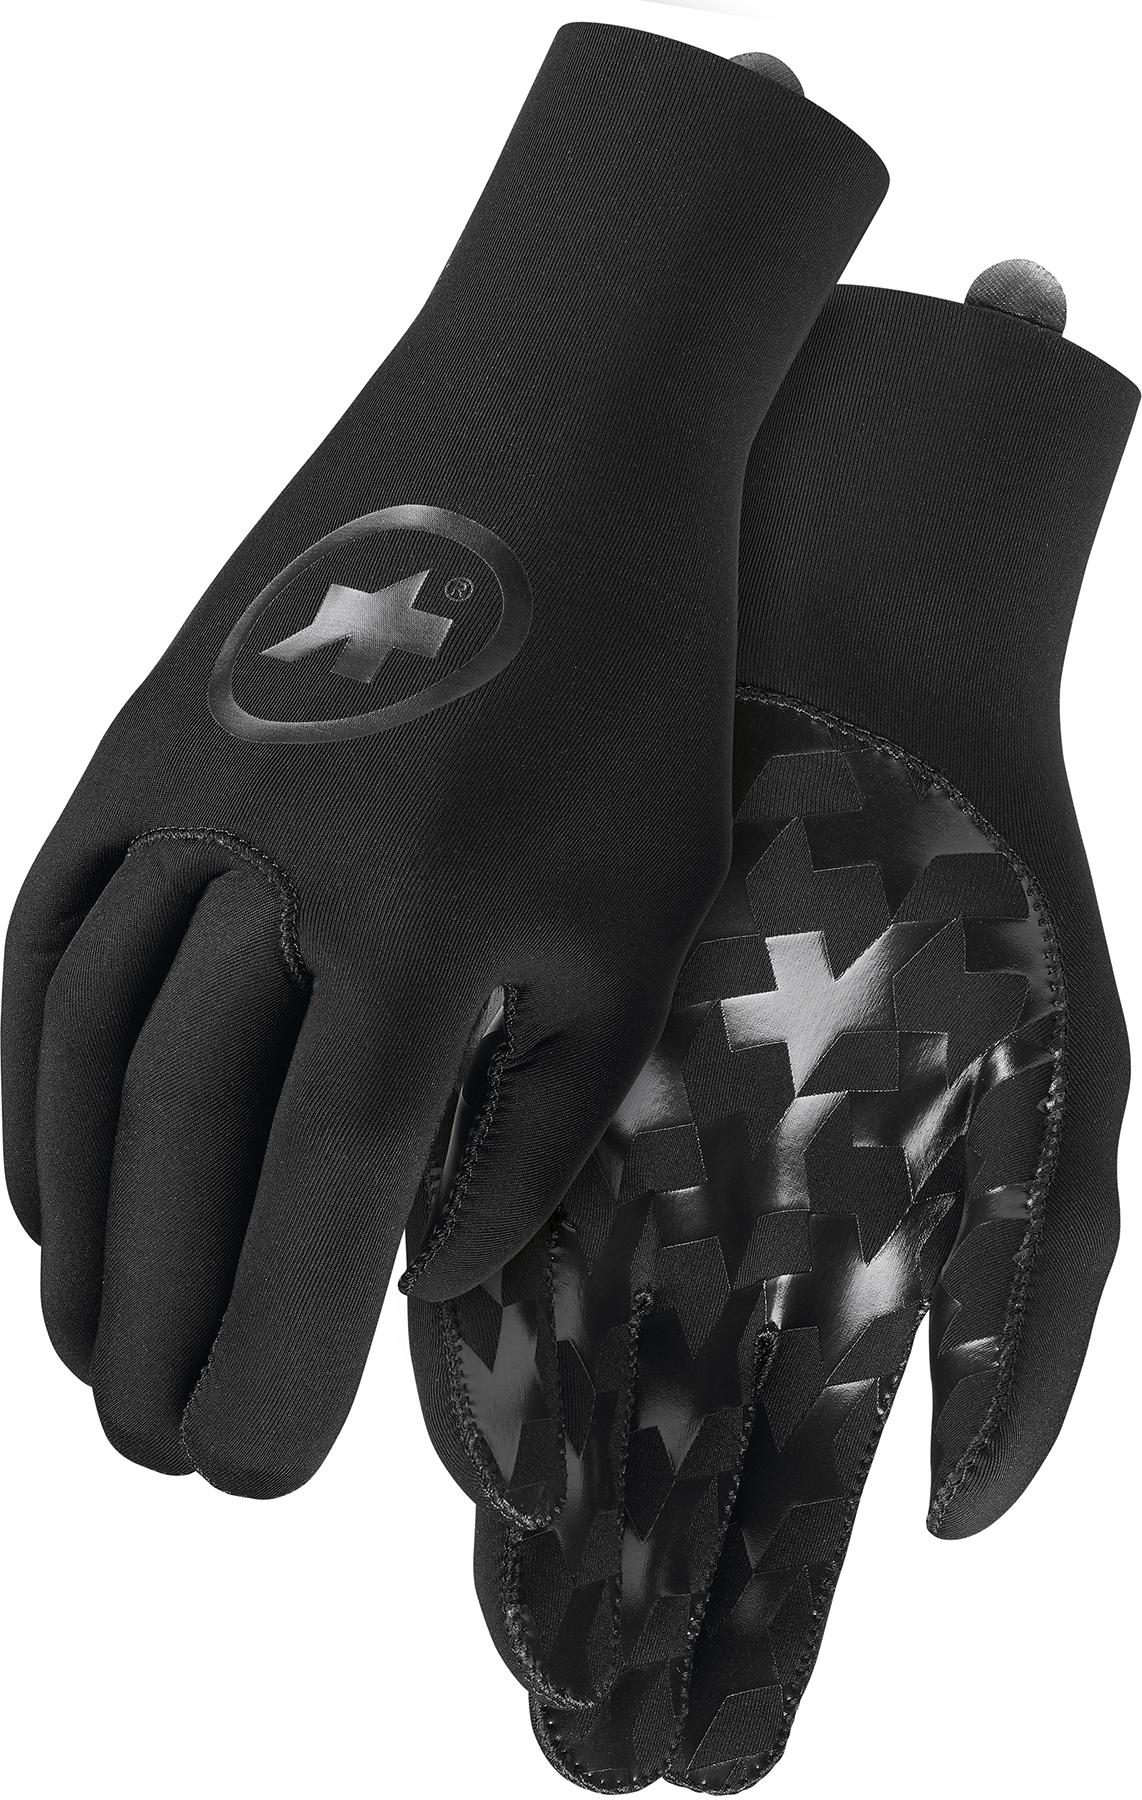 Assos Gt Rain Cycling Gloves - Black Series